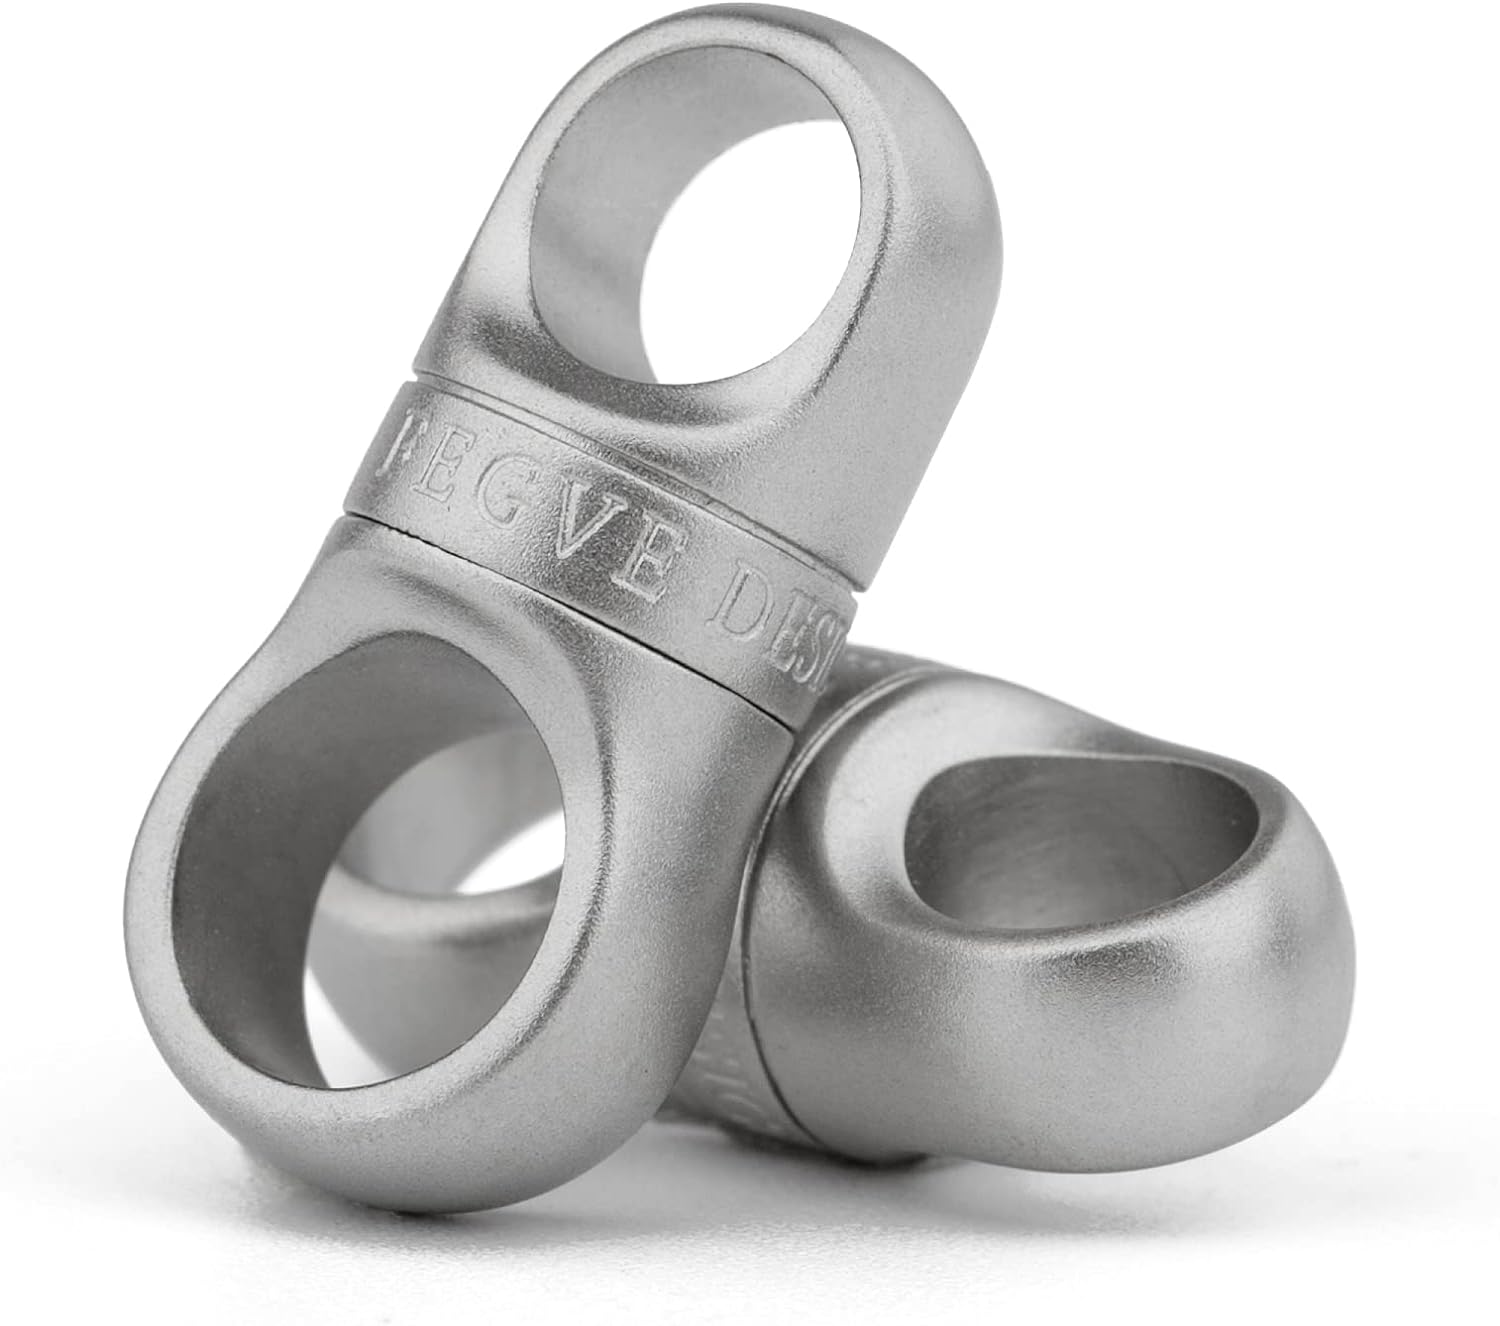 TISUR Titanium Key Ring, Key Chain Rings Heavy Duty Swivel